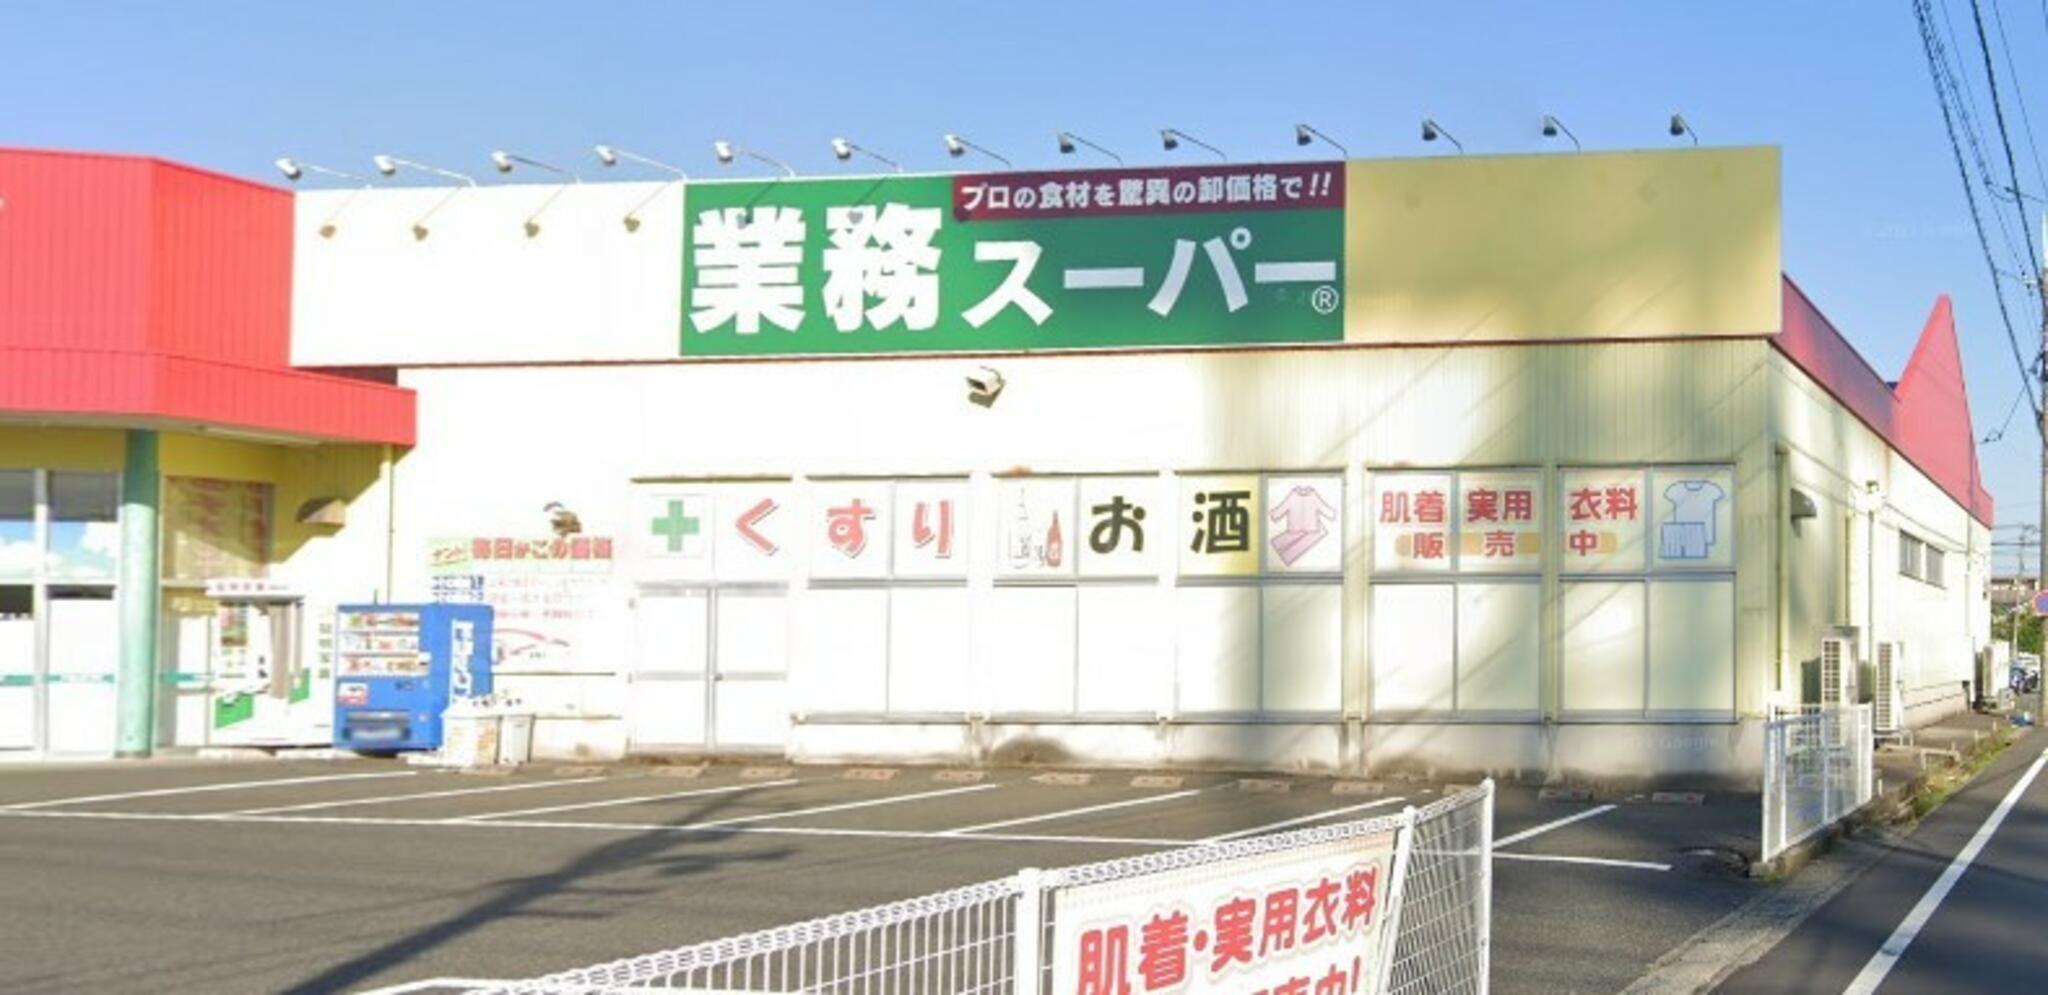 業務スーパー 鳥取駅南店の代表写真3